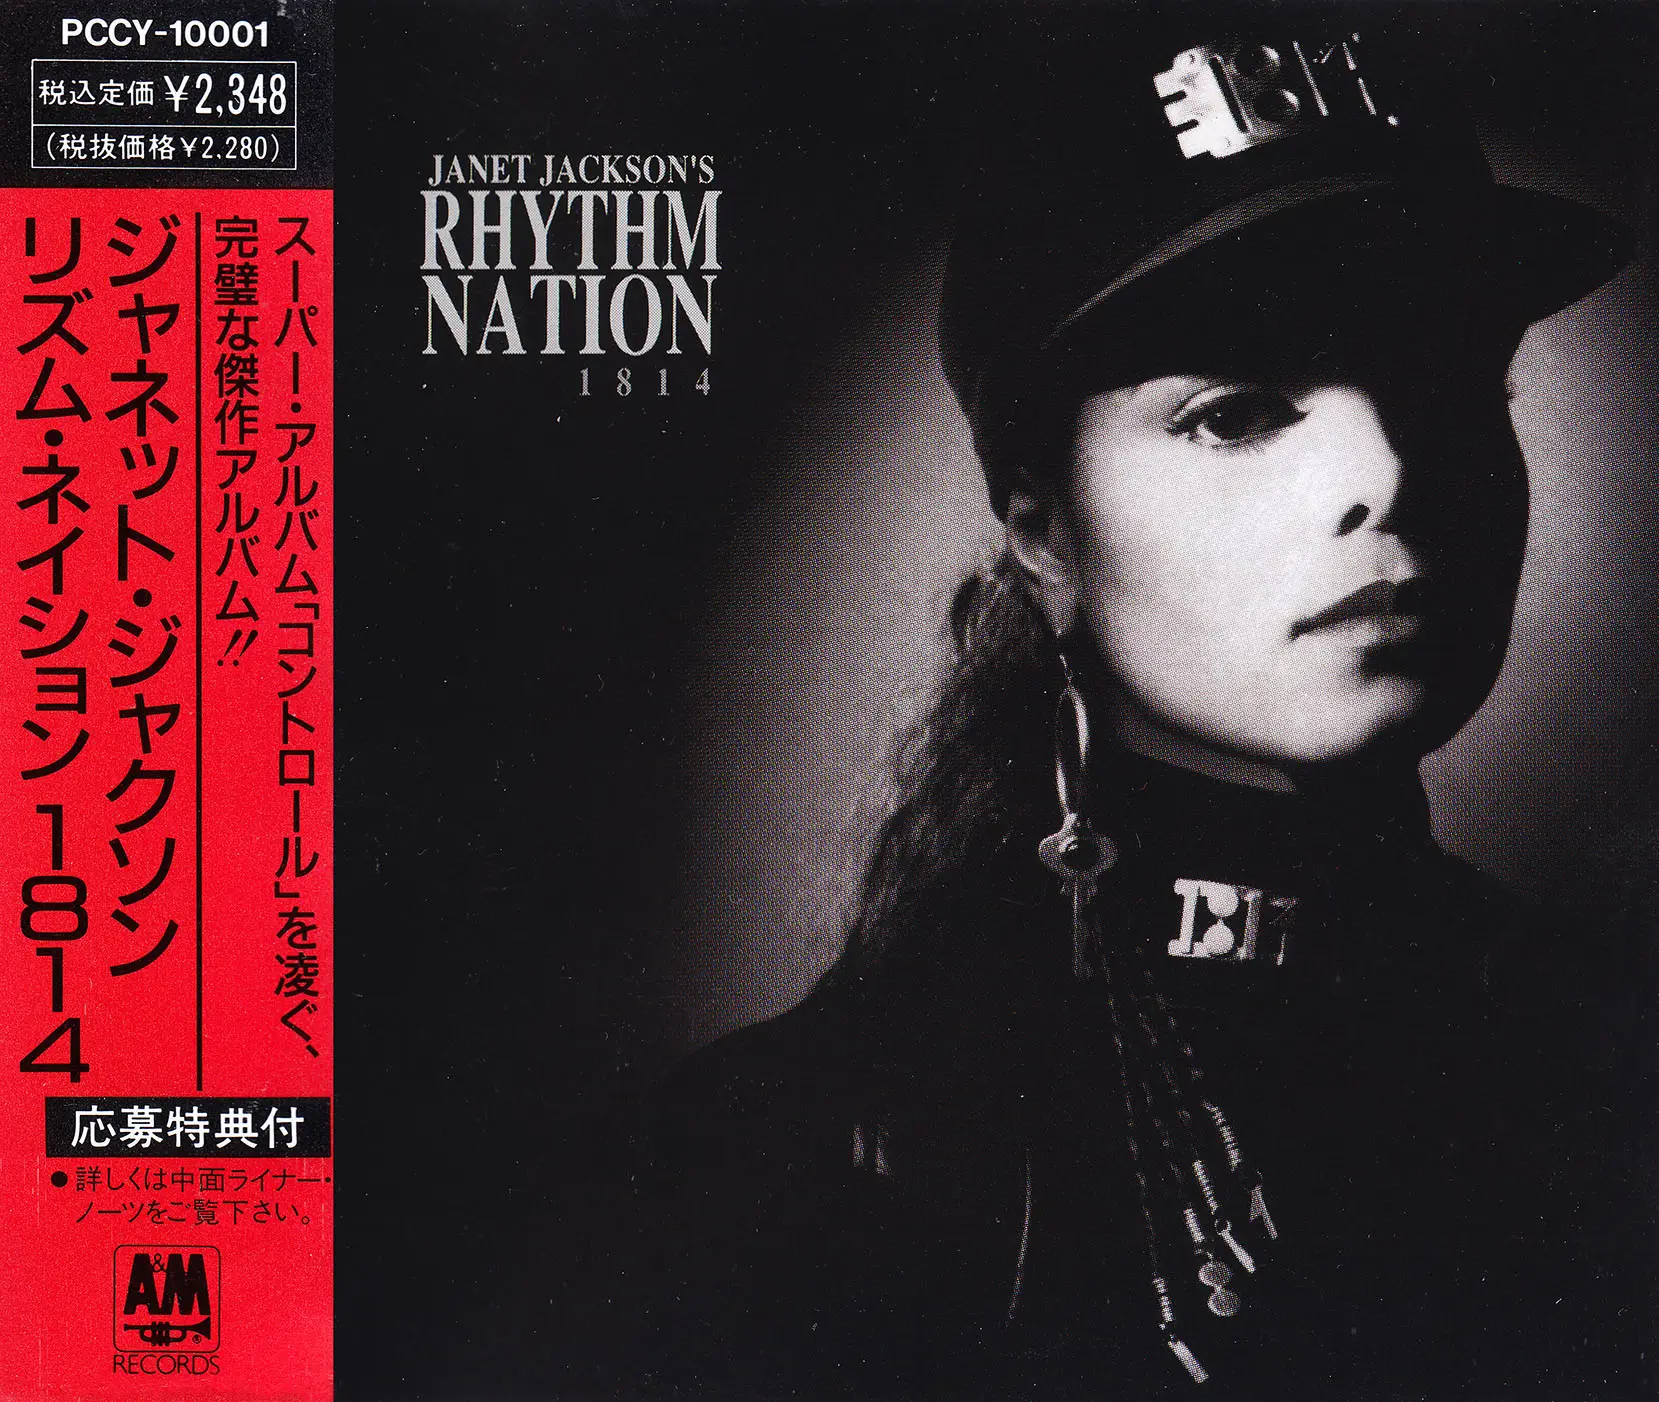 Janet Jackson Rhythm Nation 1814 1989 Japanese 1st Press Avaxhome